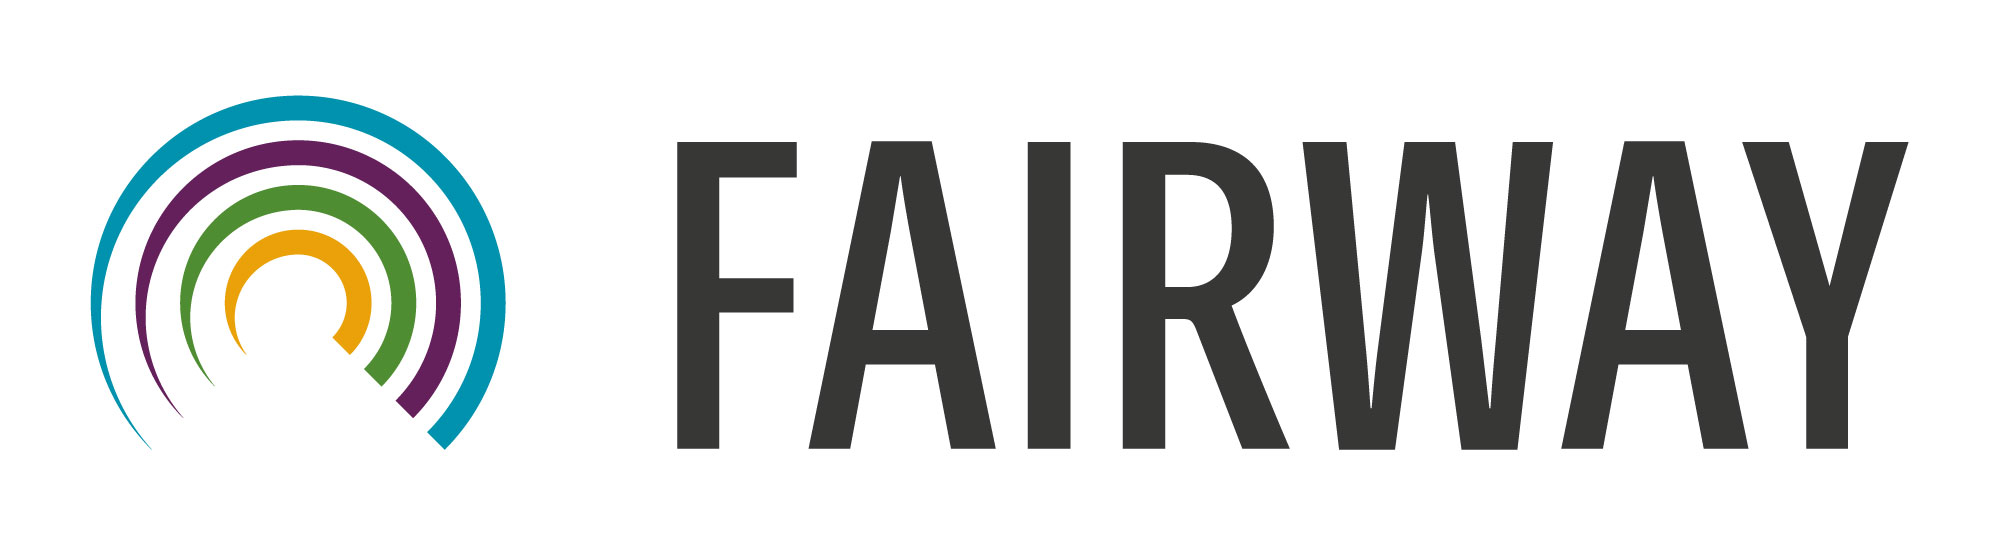 Fairway's company logo with coloured icon